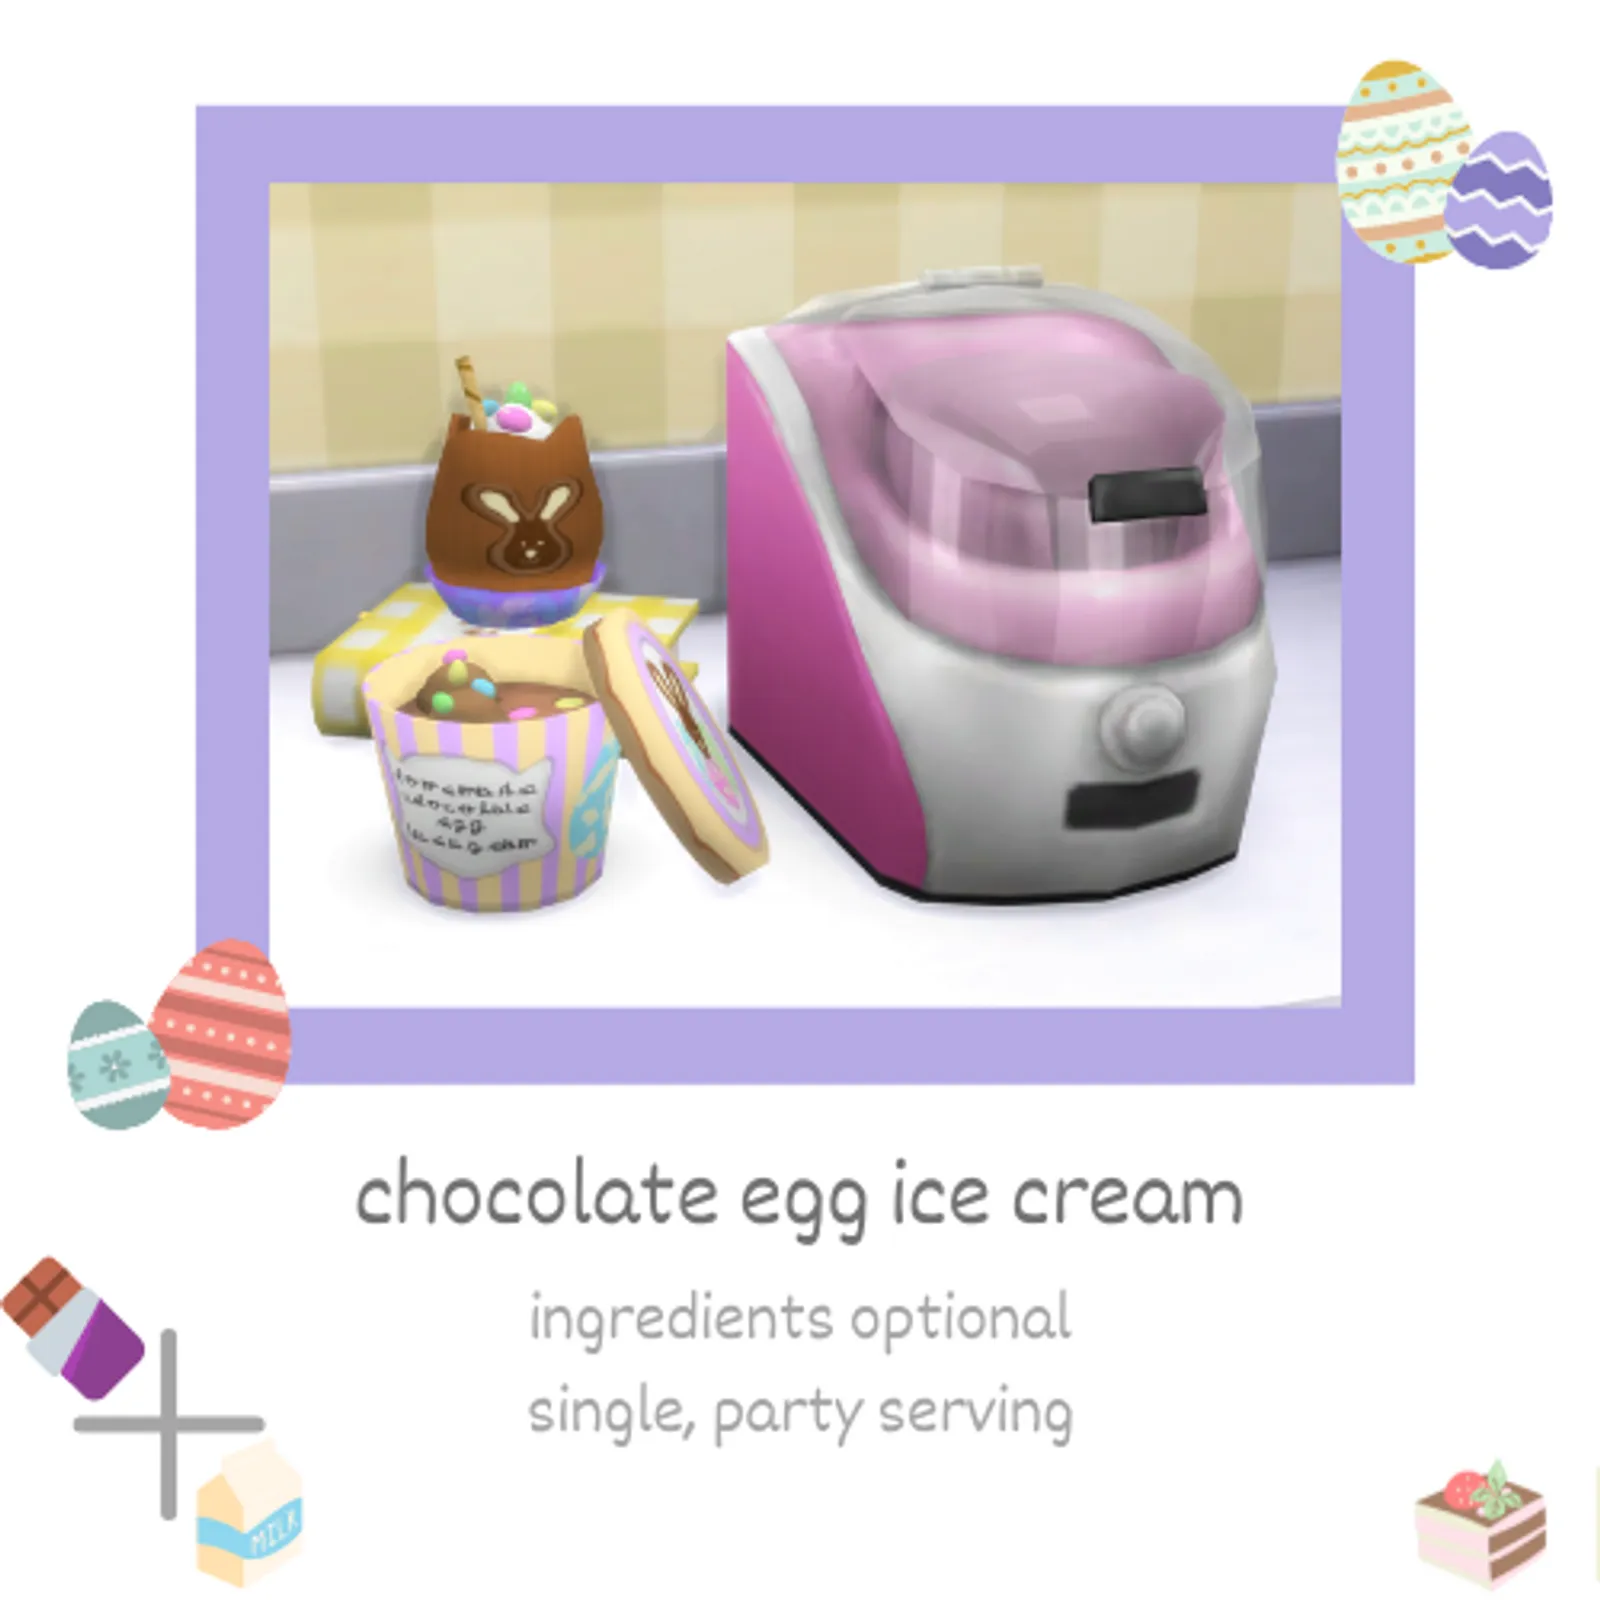 chocolate egg ice cream - 2 versions 